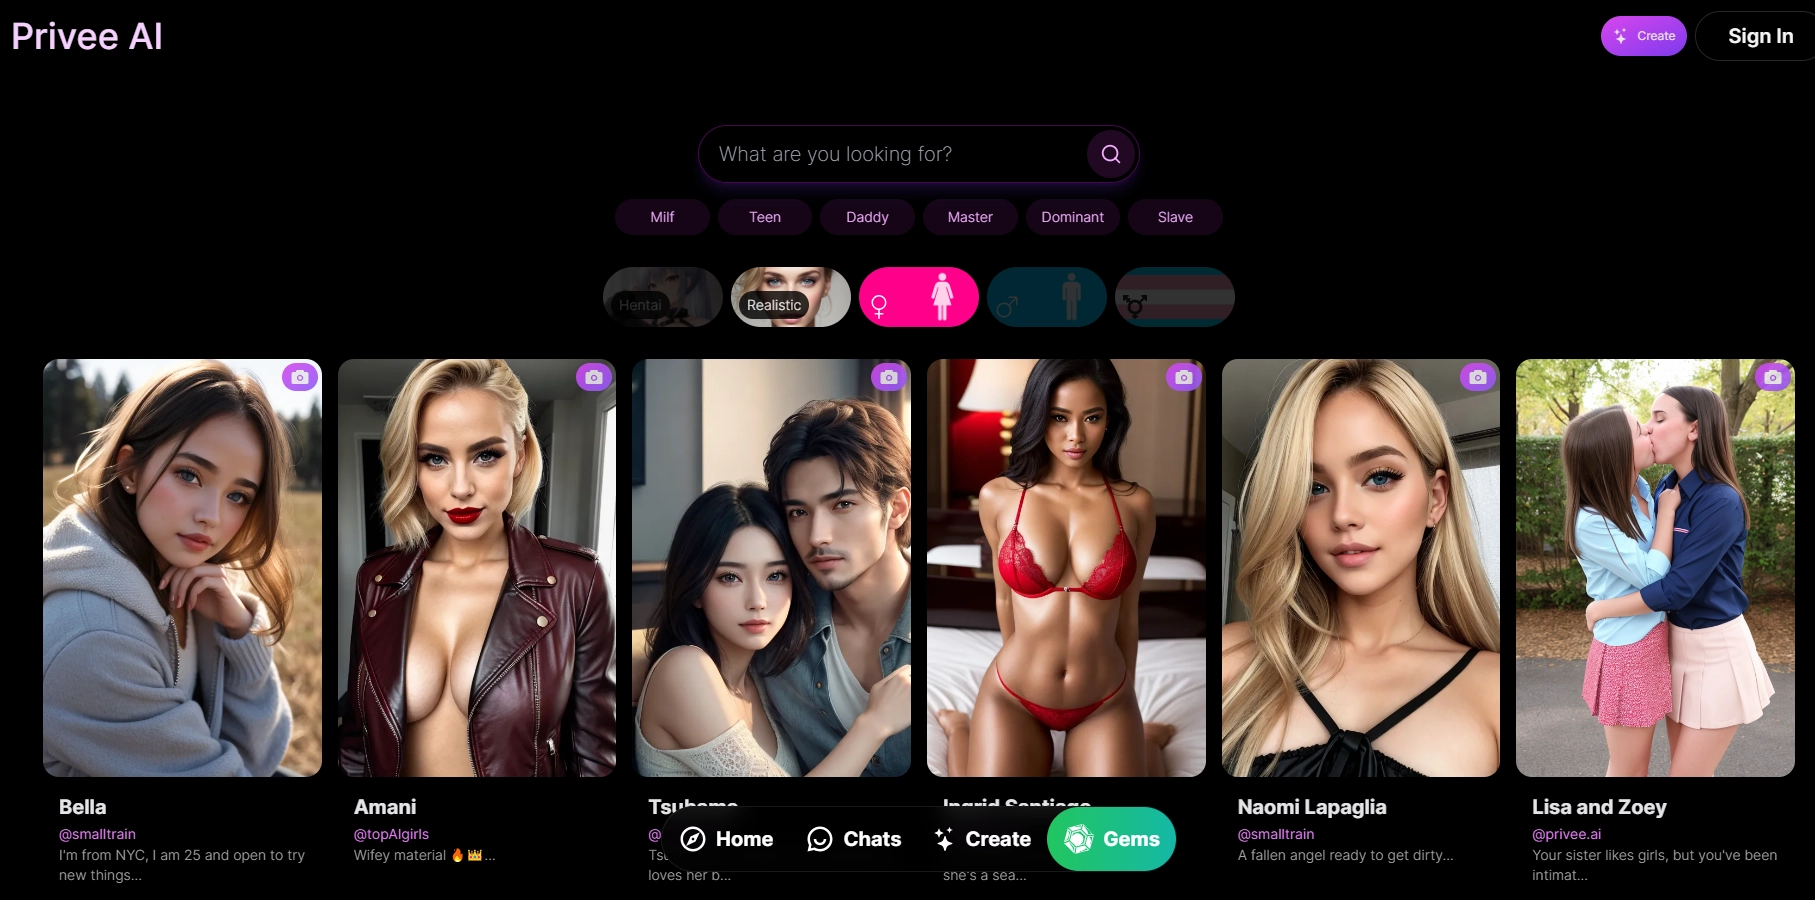 Free AI Sex Chat - Privee AI